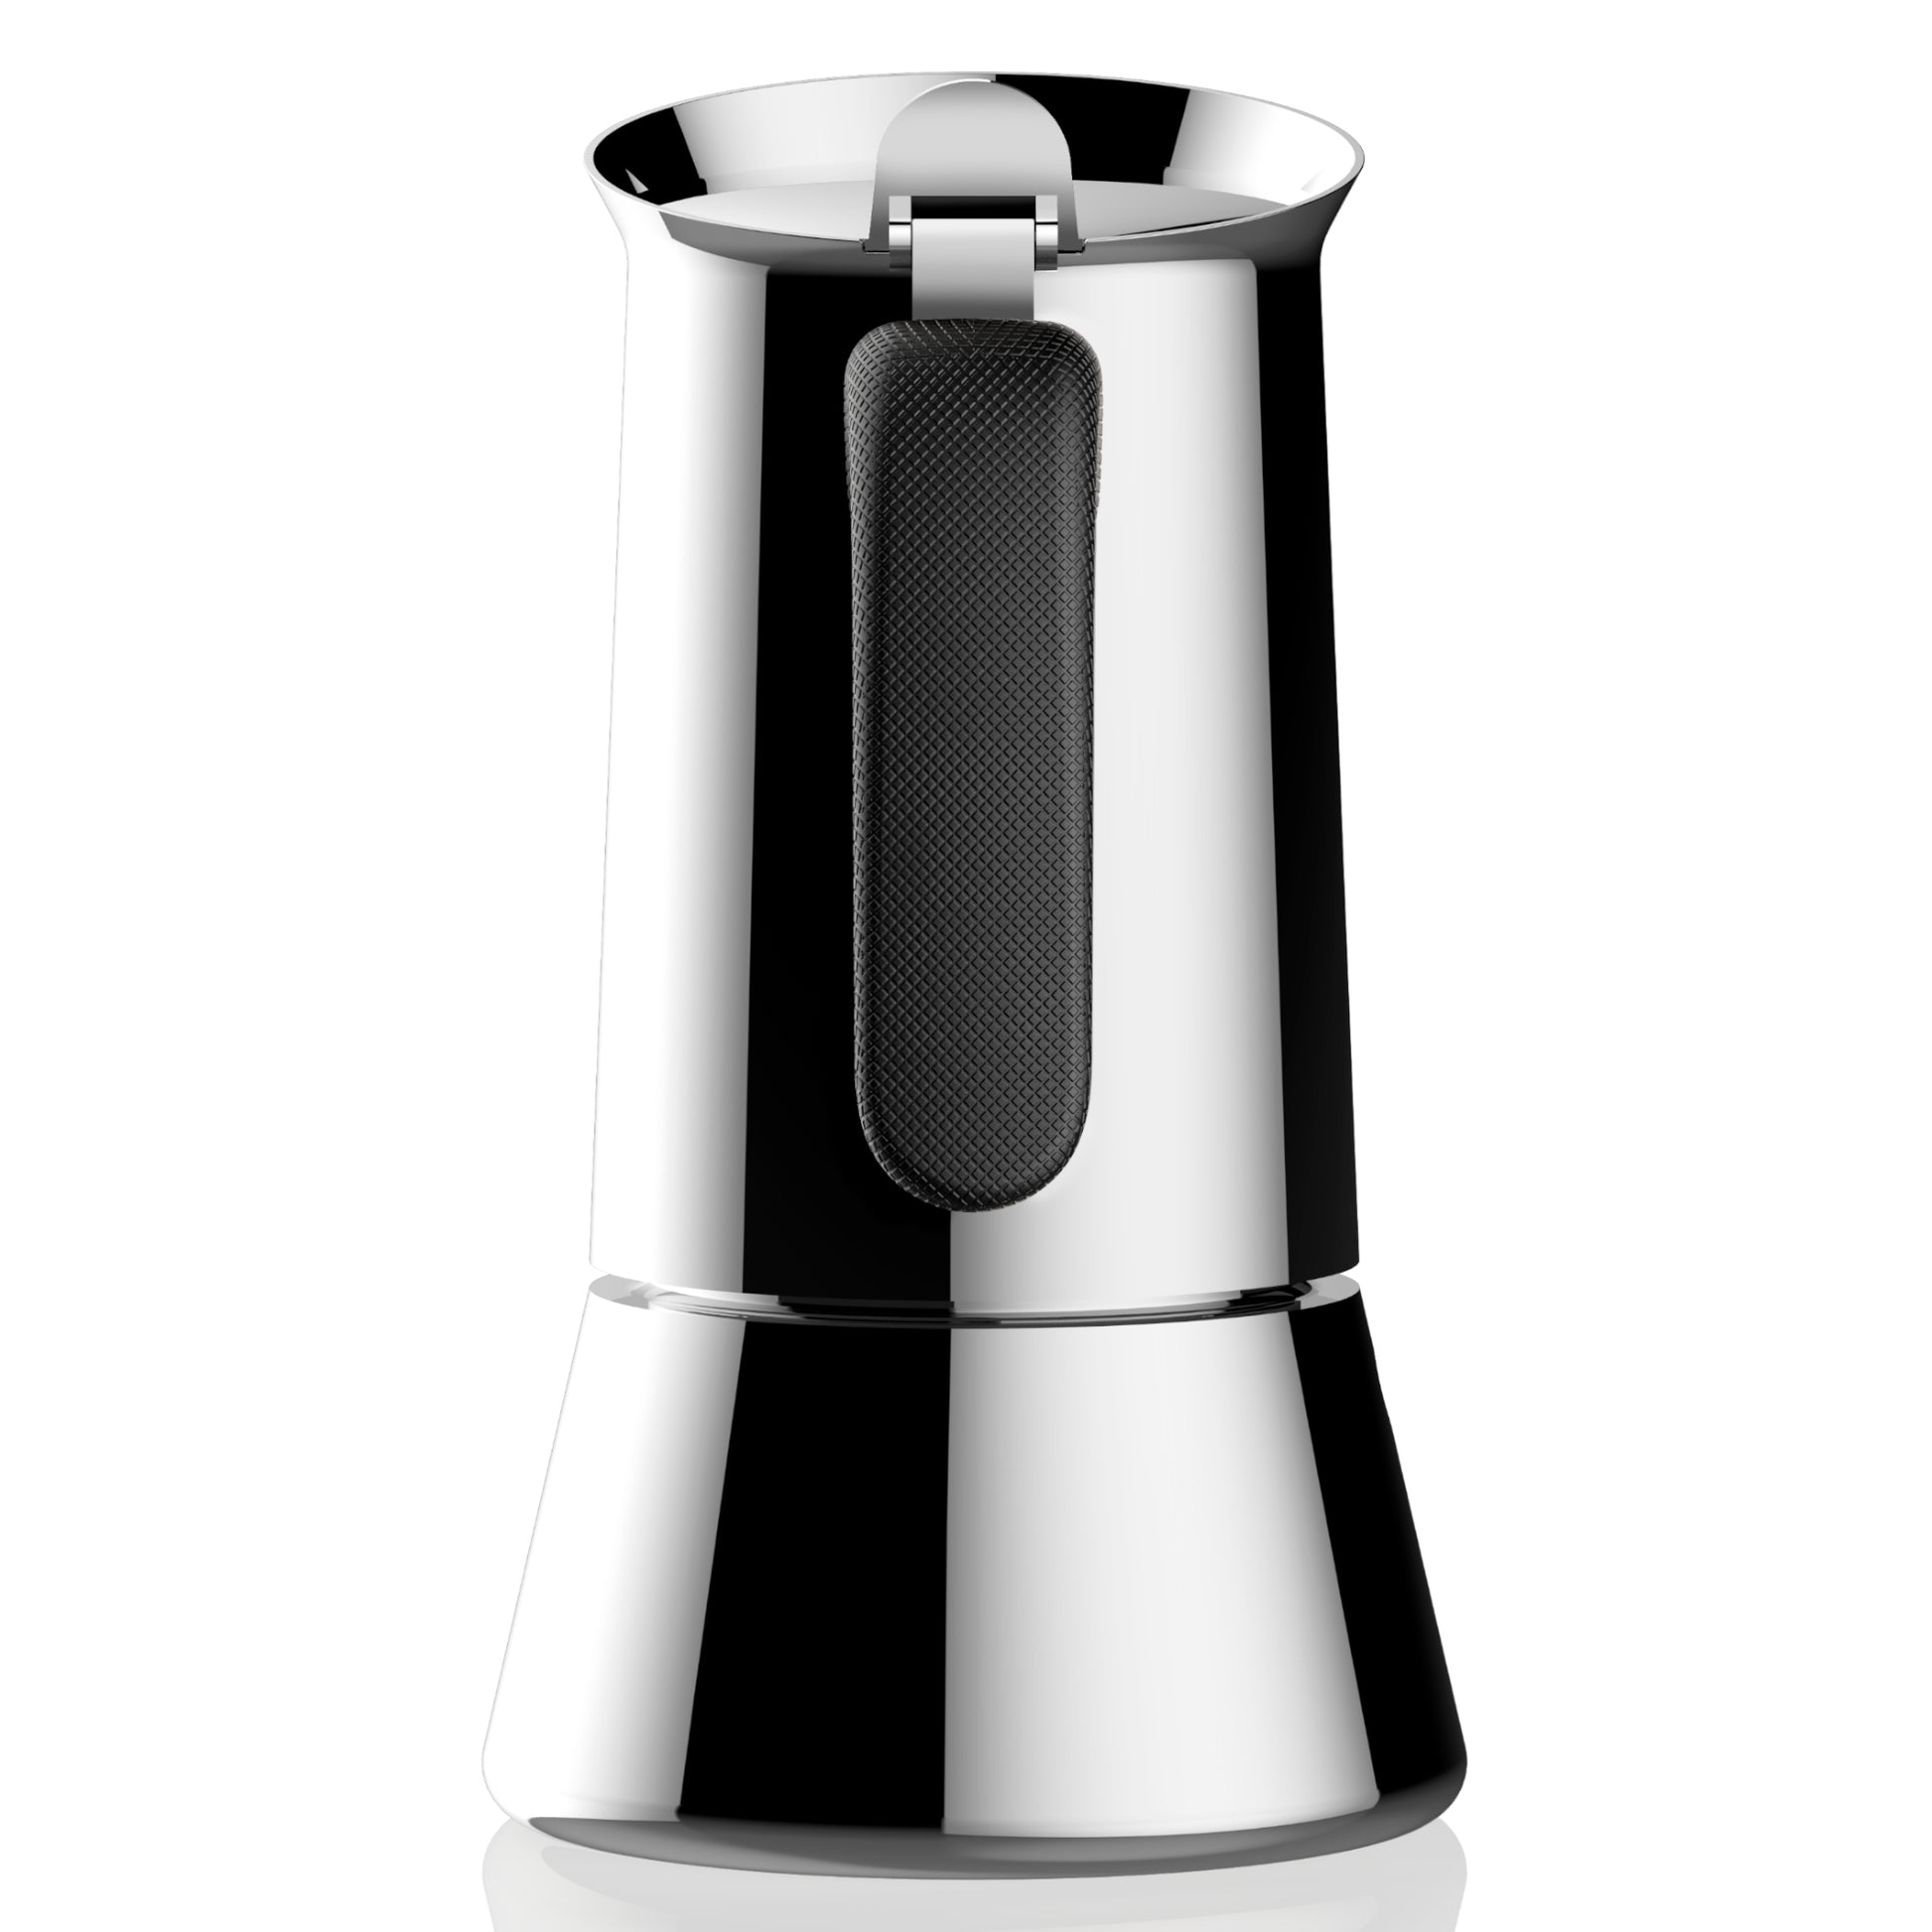  Bialetti Venus 2 Cup Stainless Steel Espresso Maker : Home &  Kitchen